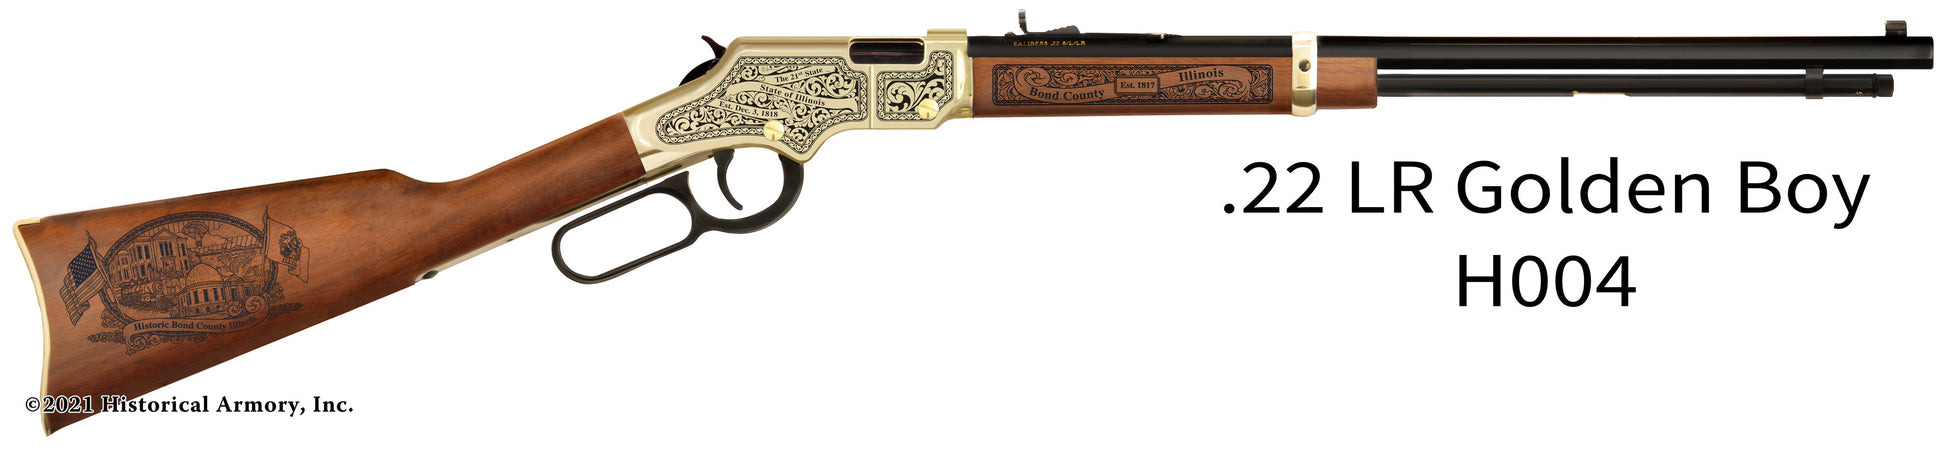 Bond County Illinois History Engraved  Rifle Henry Golden Boy .22 | Historical Armory